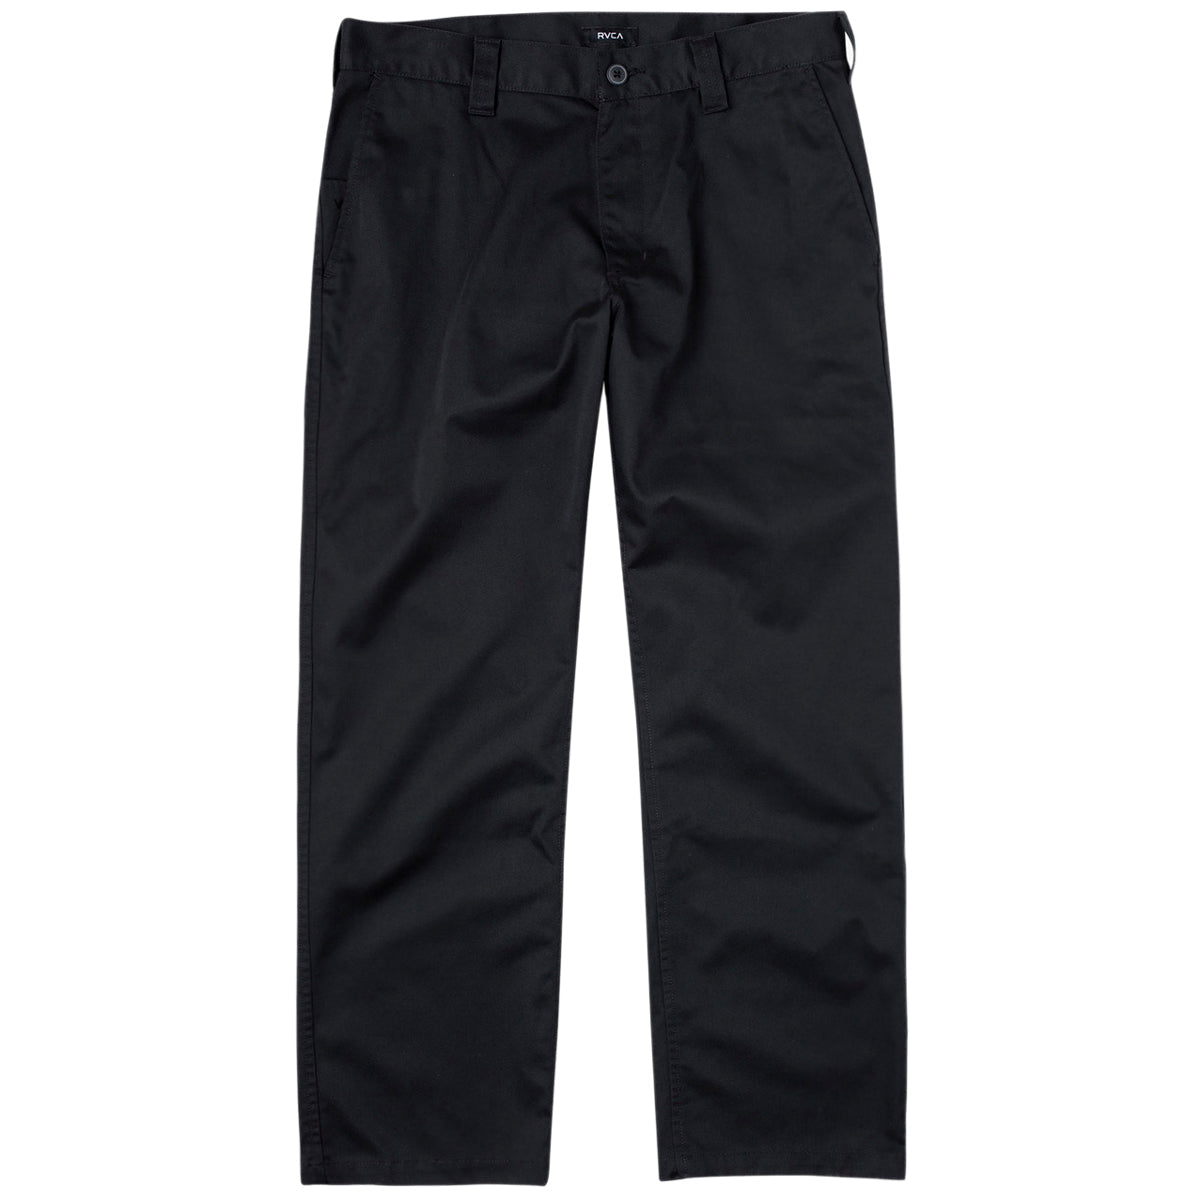 RVCA Americana Chino Pants - Black image 2